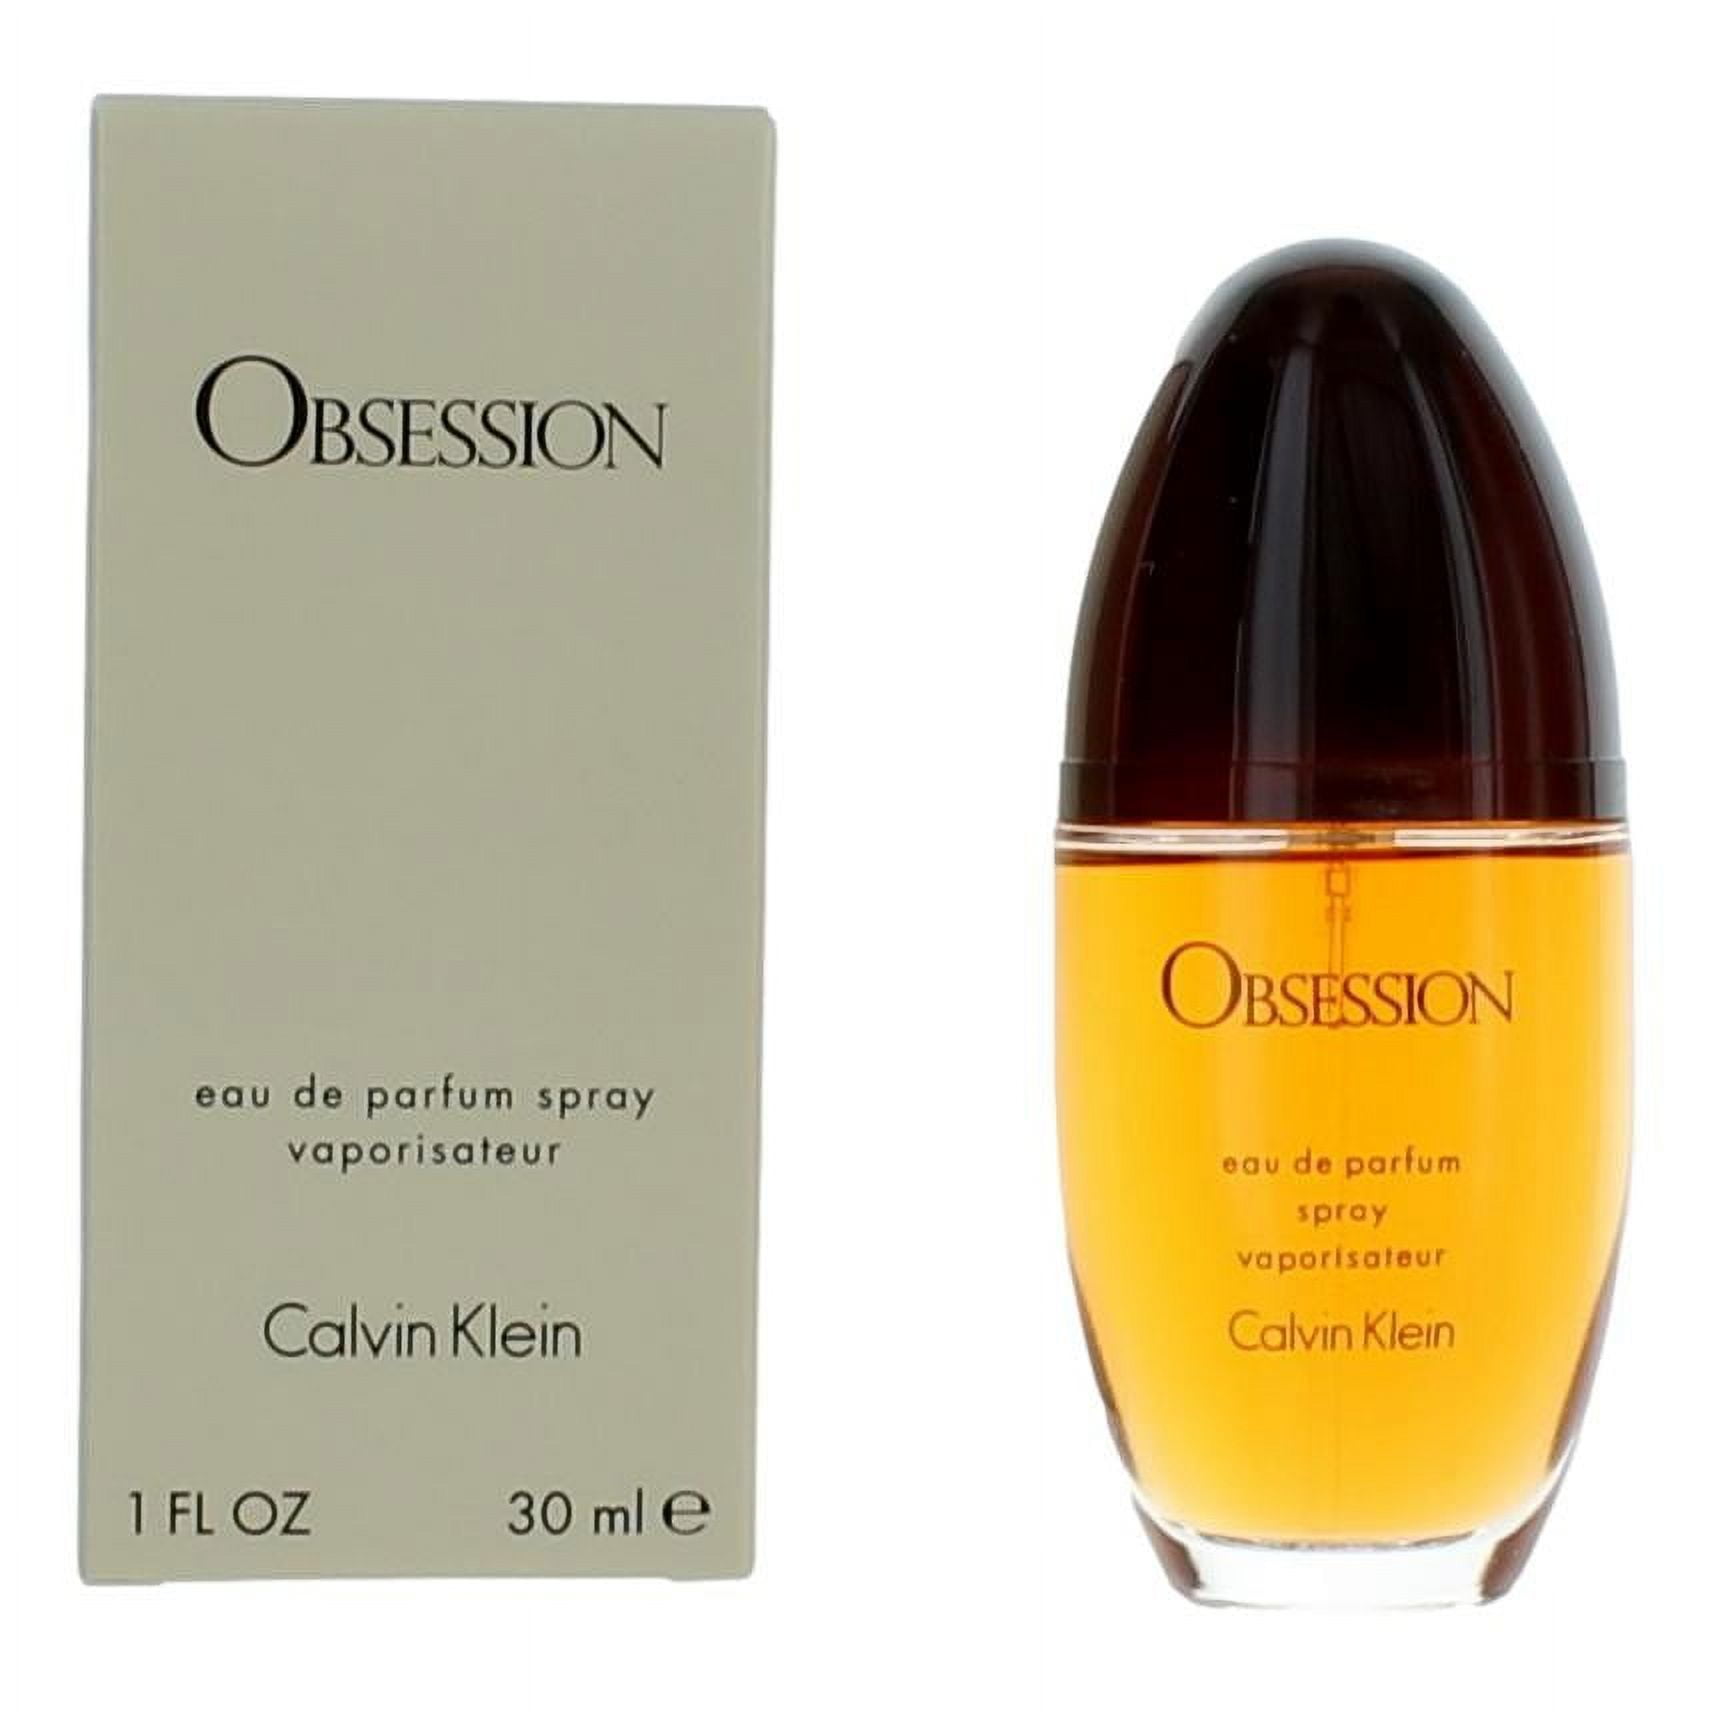 Klein Women, for de Calvin oz Parfum, Obsession Perfume 3.4 Eau